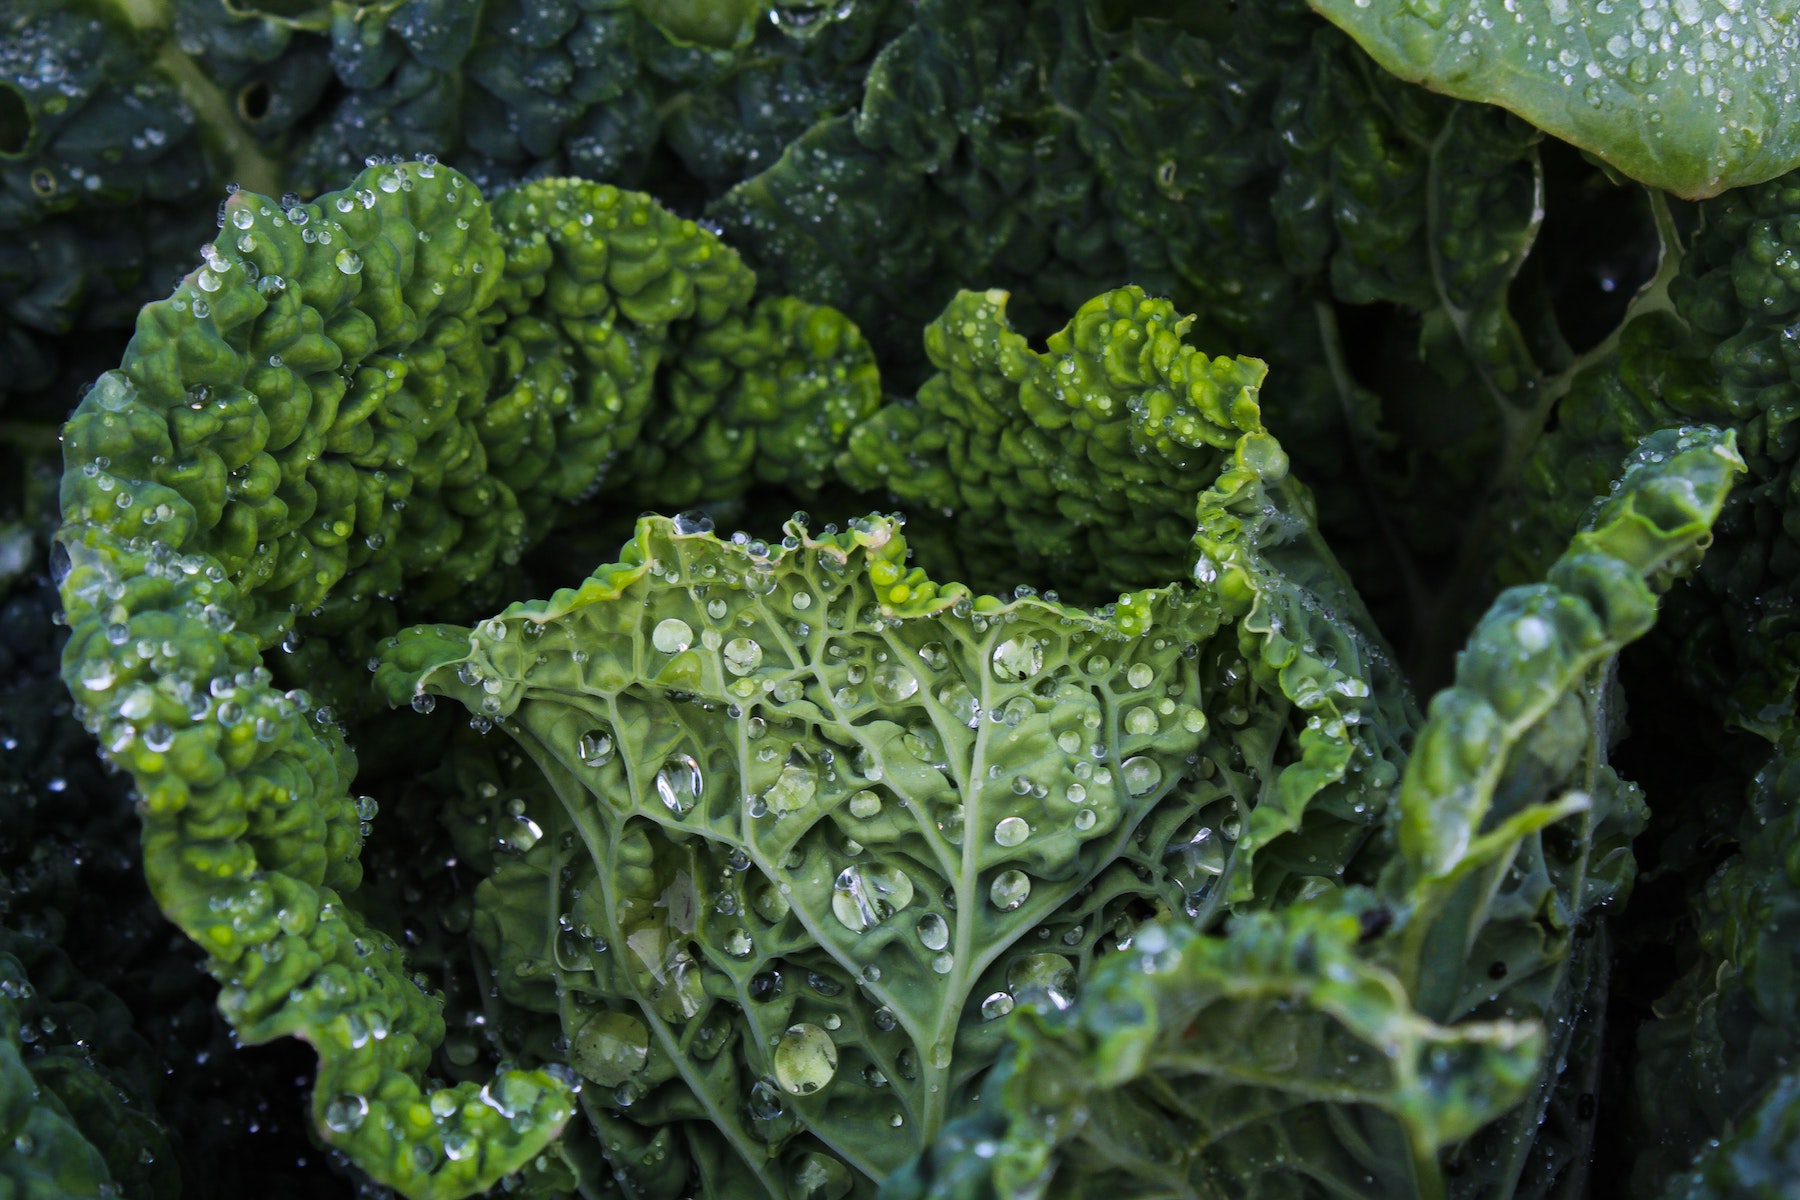 How to grow kale